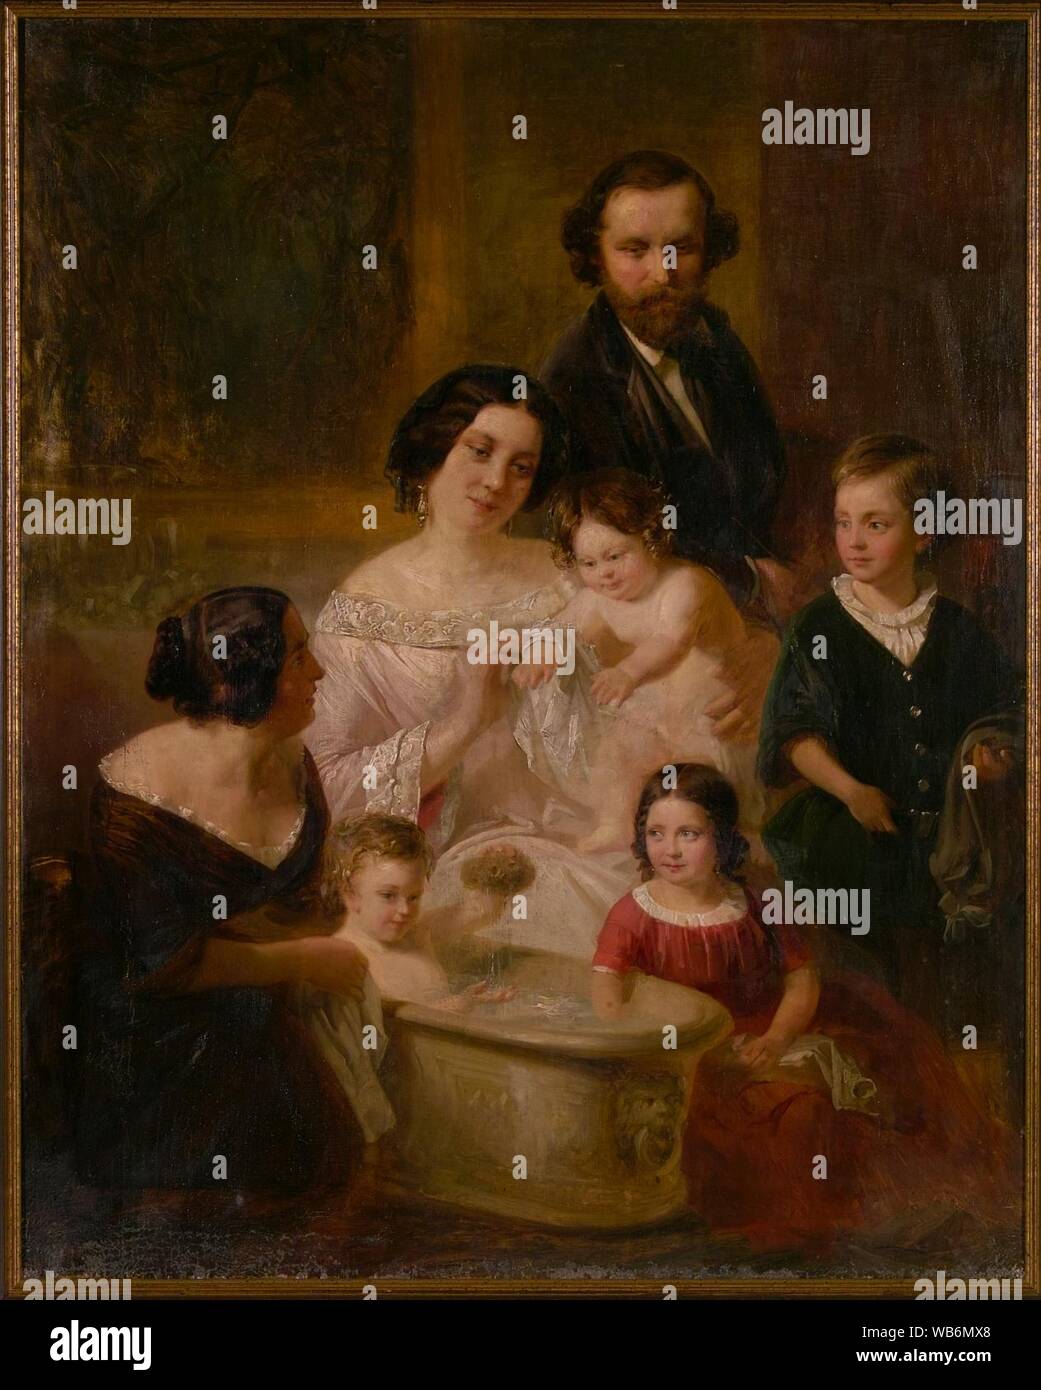 Edmund Wodick 'Familienbild', 1855 Öl auf Leinwand. Foto Stock